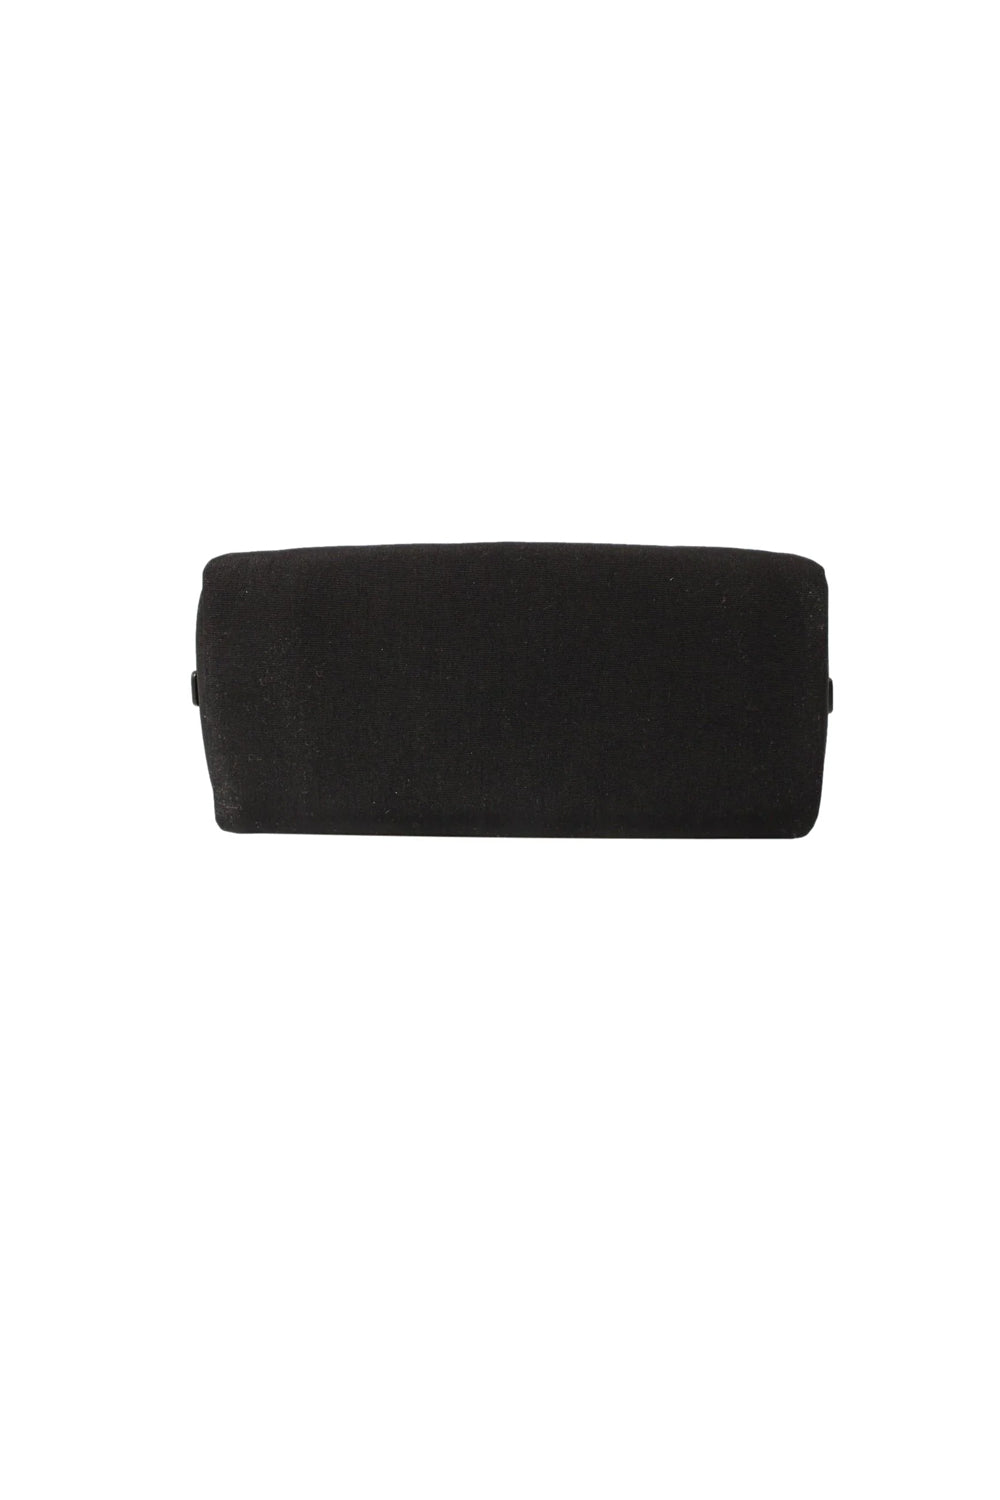 Prada Necessaire Black Cordura Fabric Cosmetic Toiletry Bag 2NA001